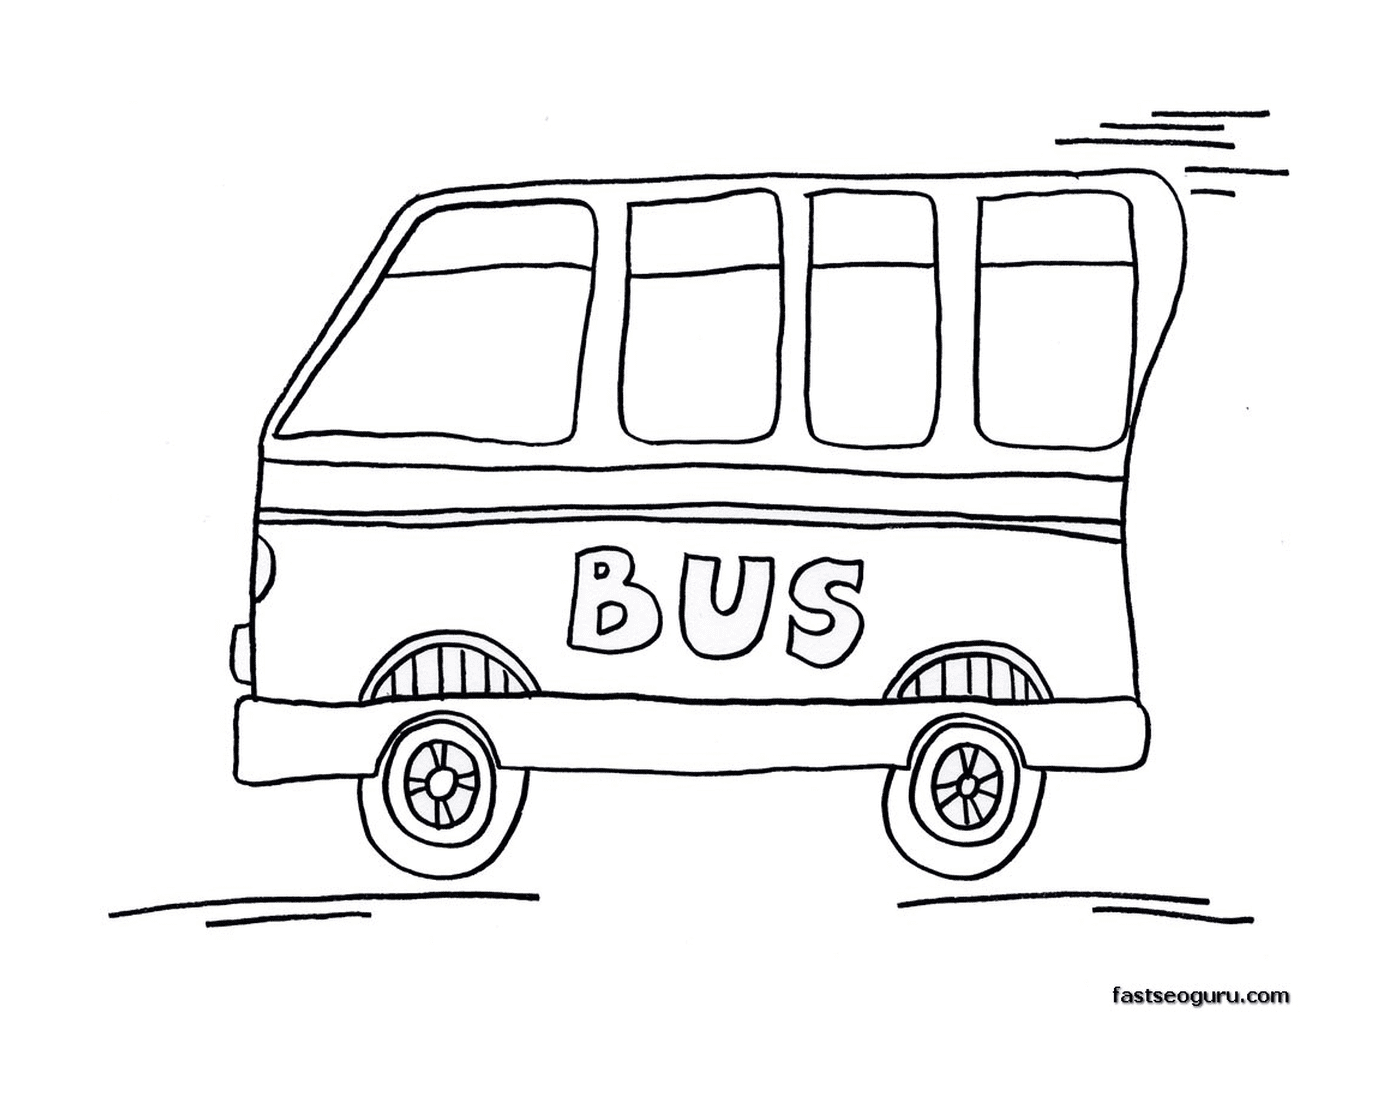   Un bus circule sur la route 